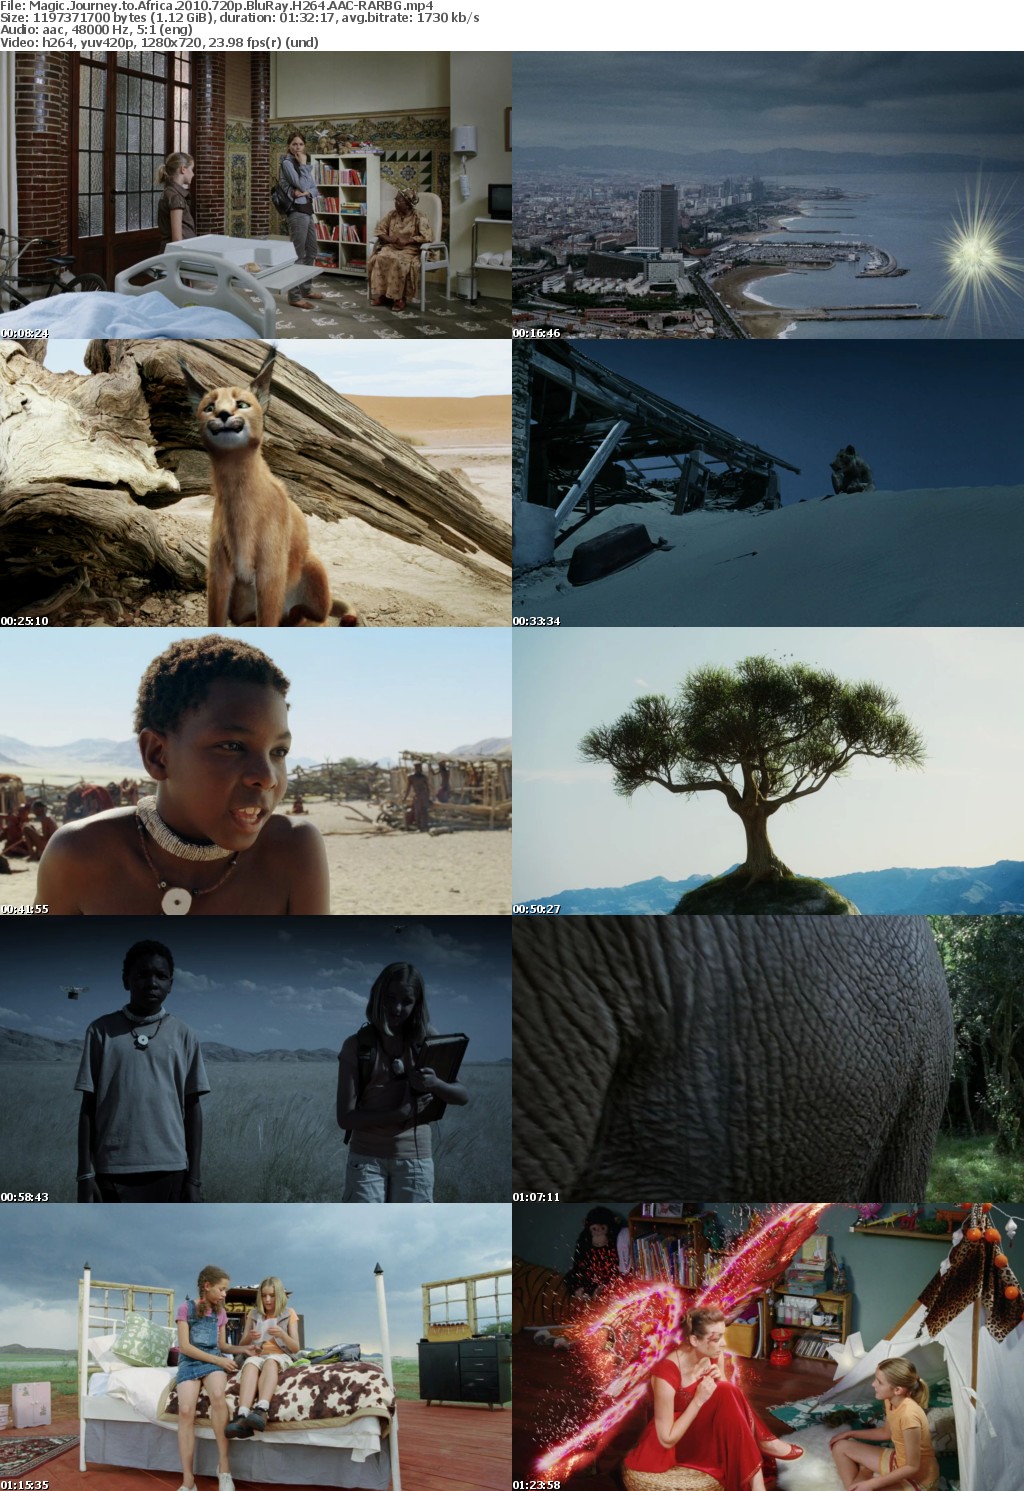 Magic Journey to Africa (2010) 720p BluRay H264 AAC-RARBG